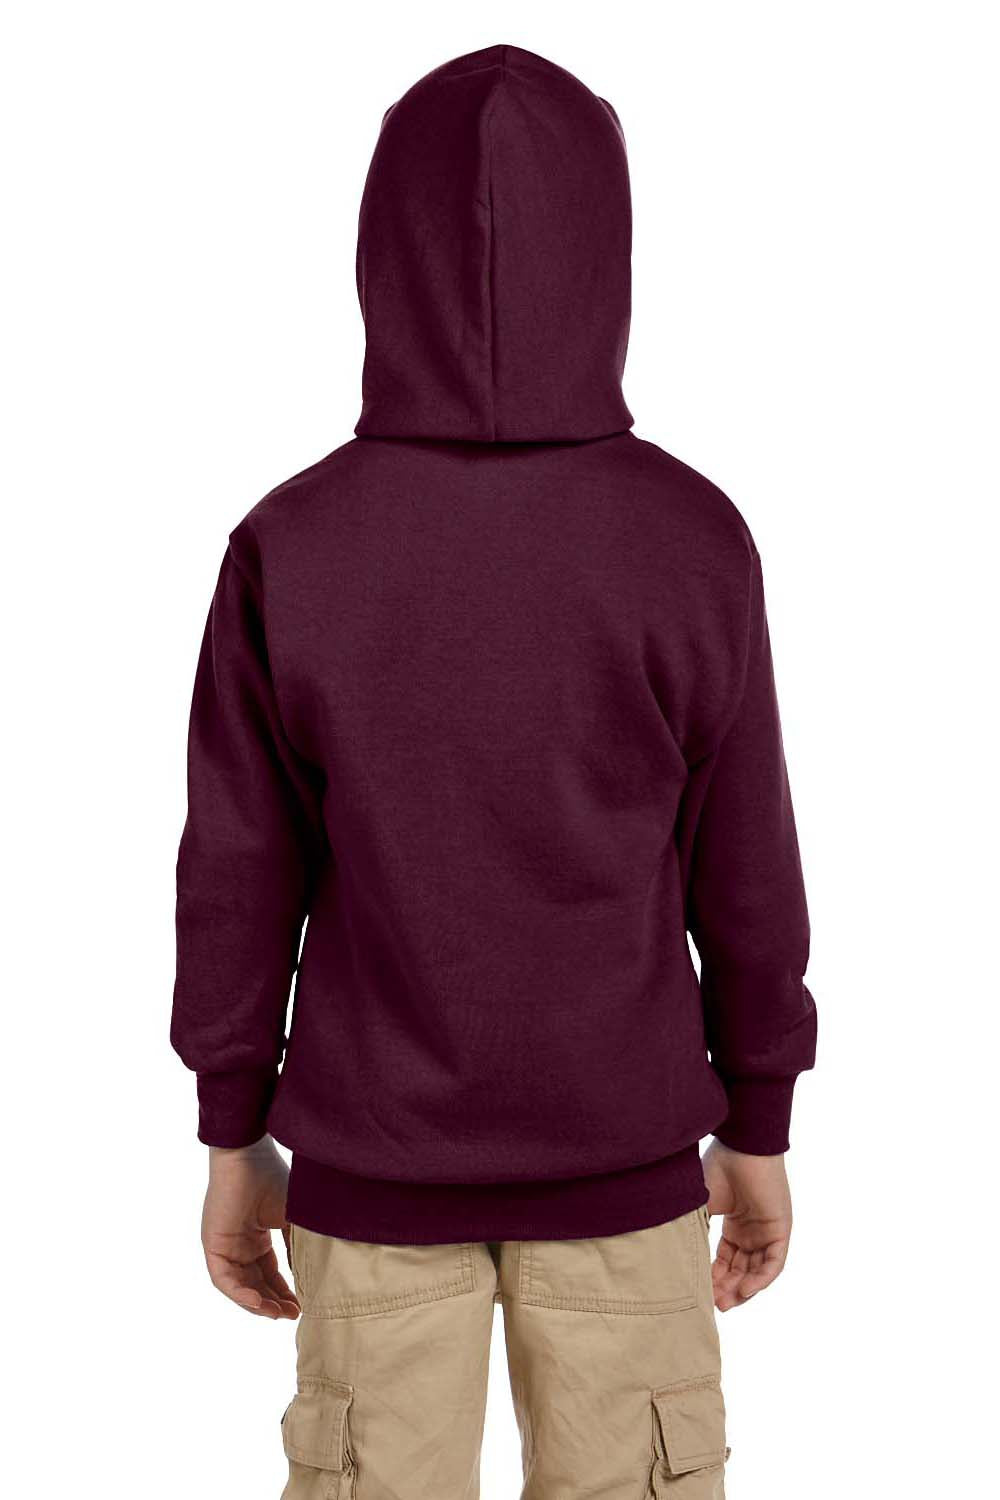 Hanes P473 Youth EcoSmart Print Pro XP Hooded Sweatshirt Hoodie Maroon Back